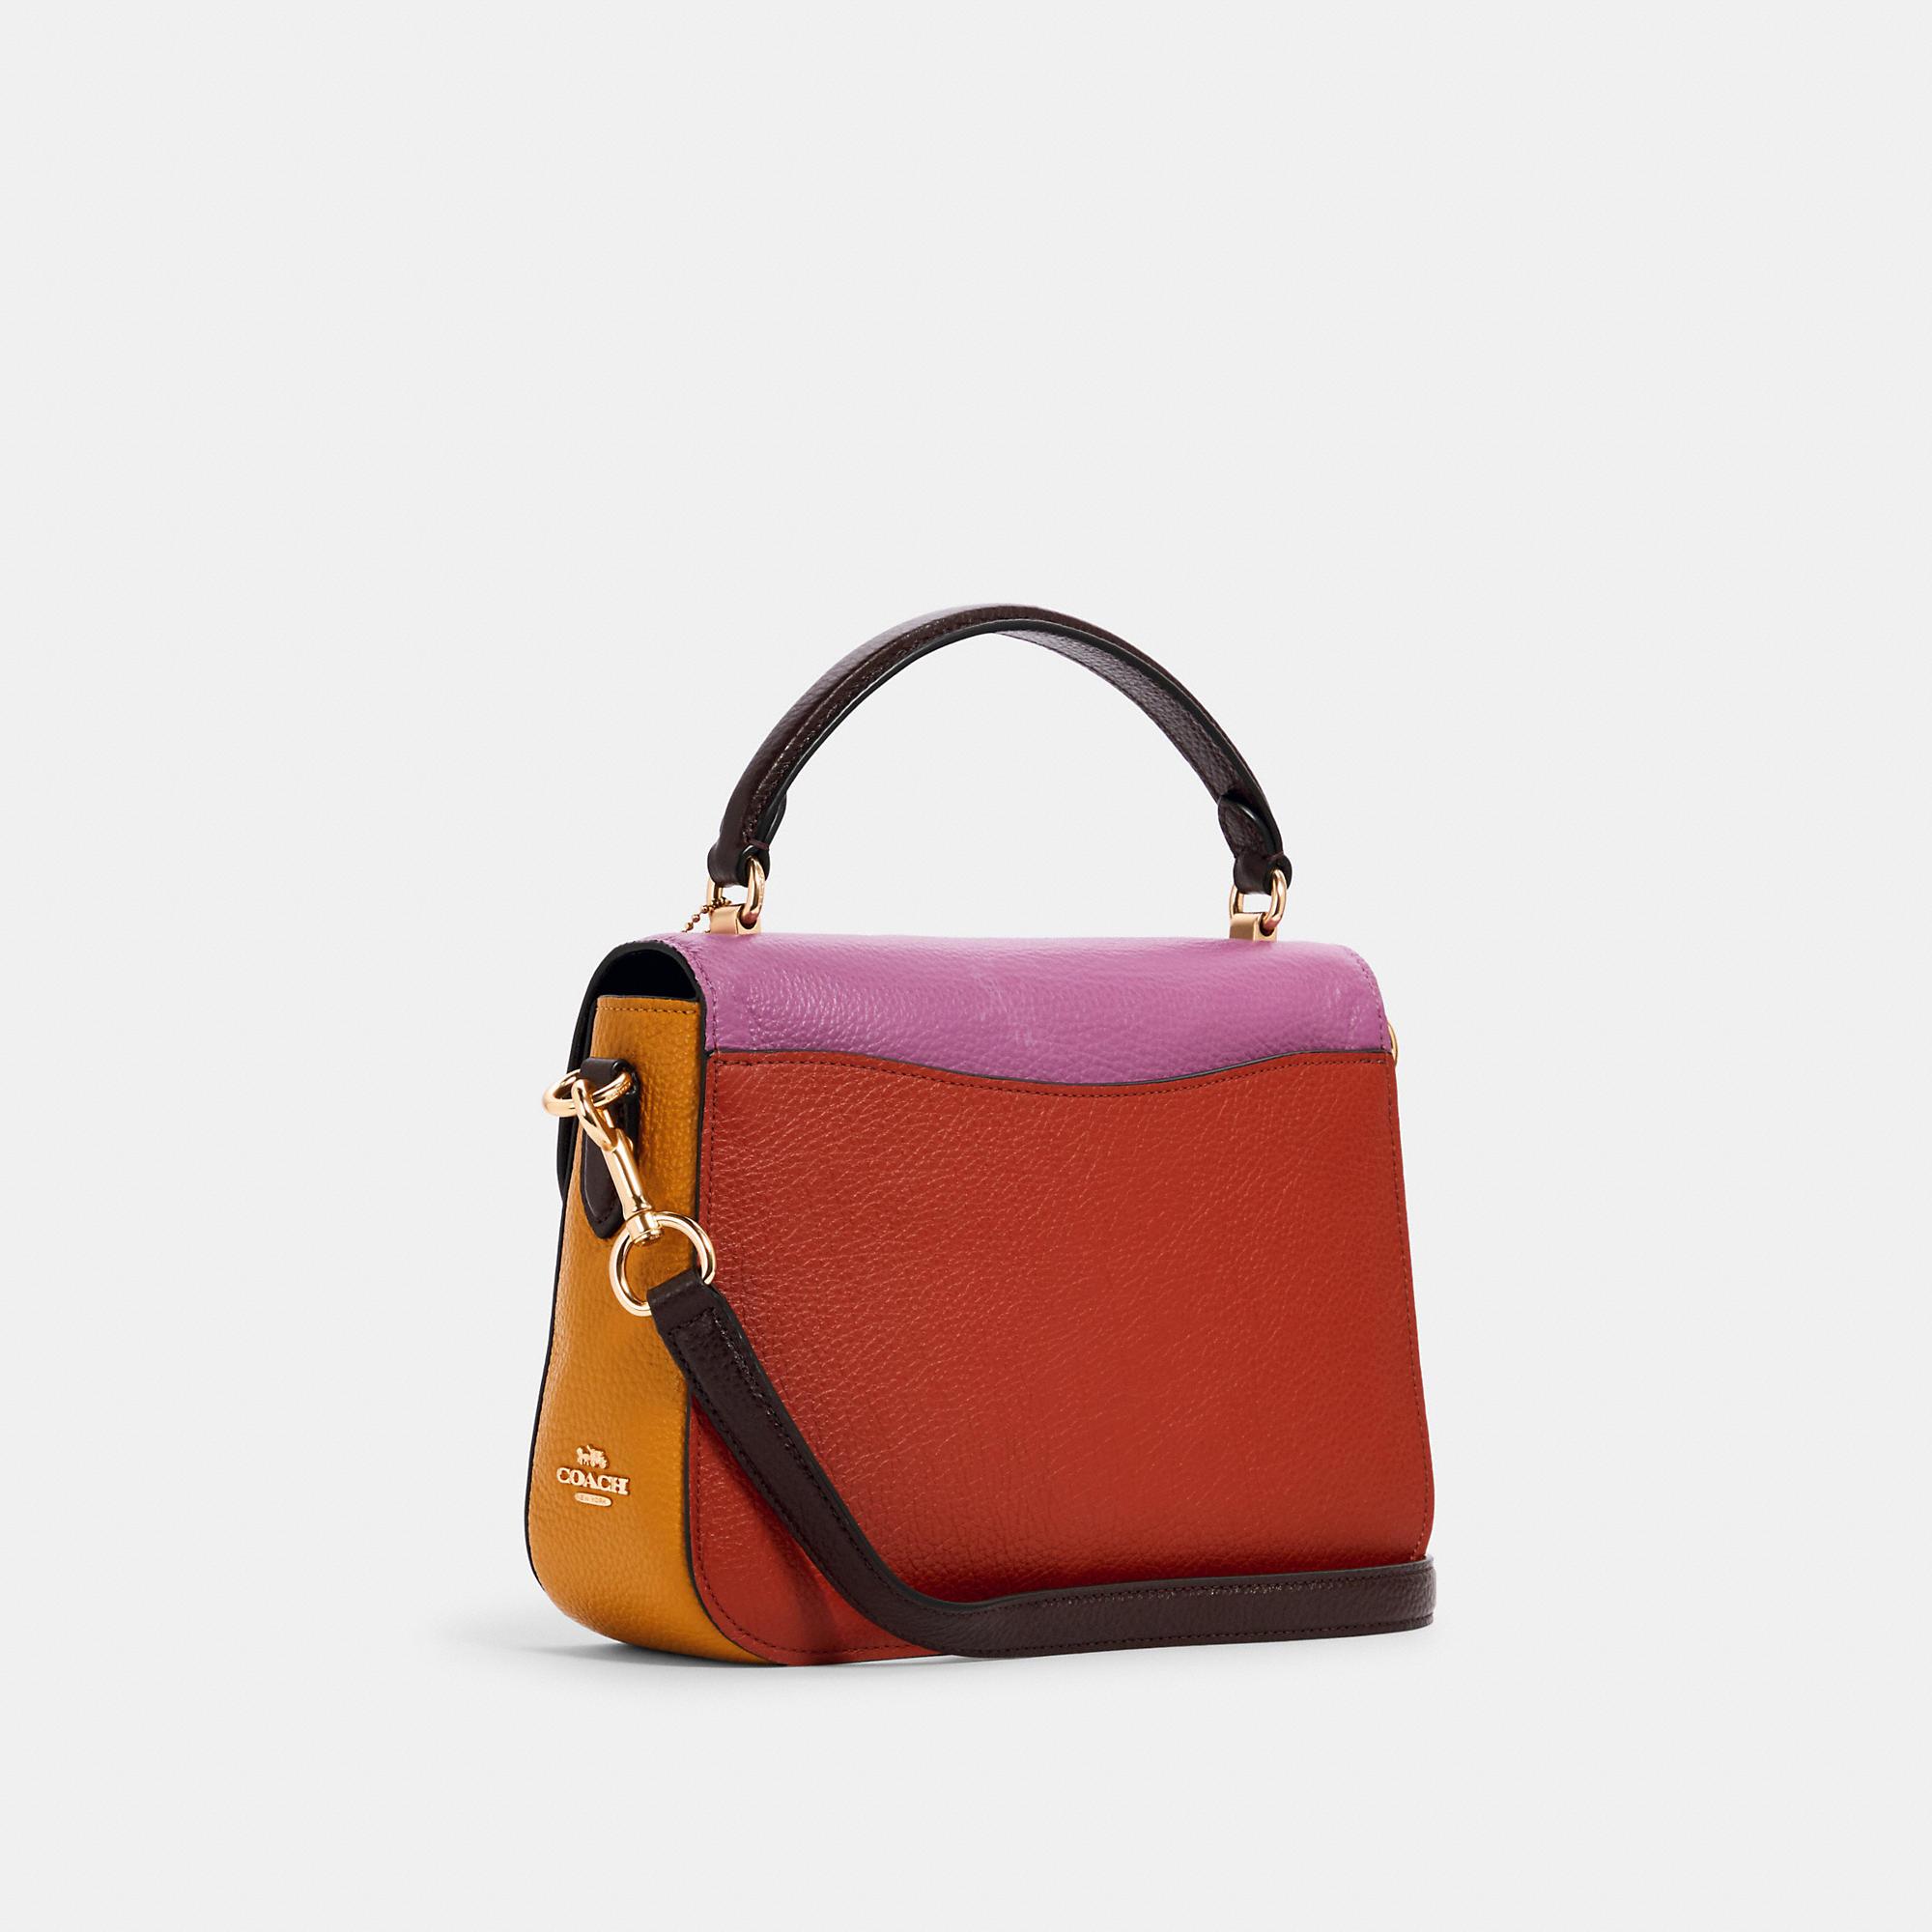 COACH Marlie Top Handle Bag Satchel In Colorblock in Red